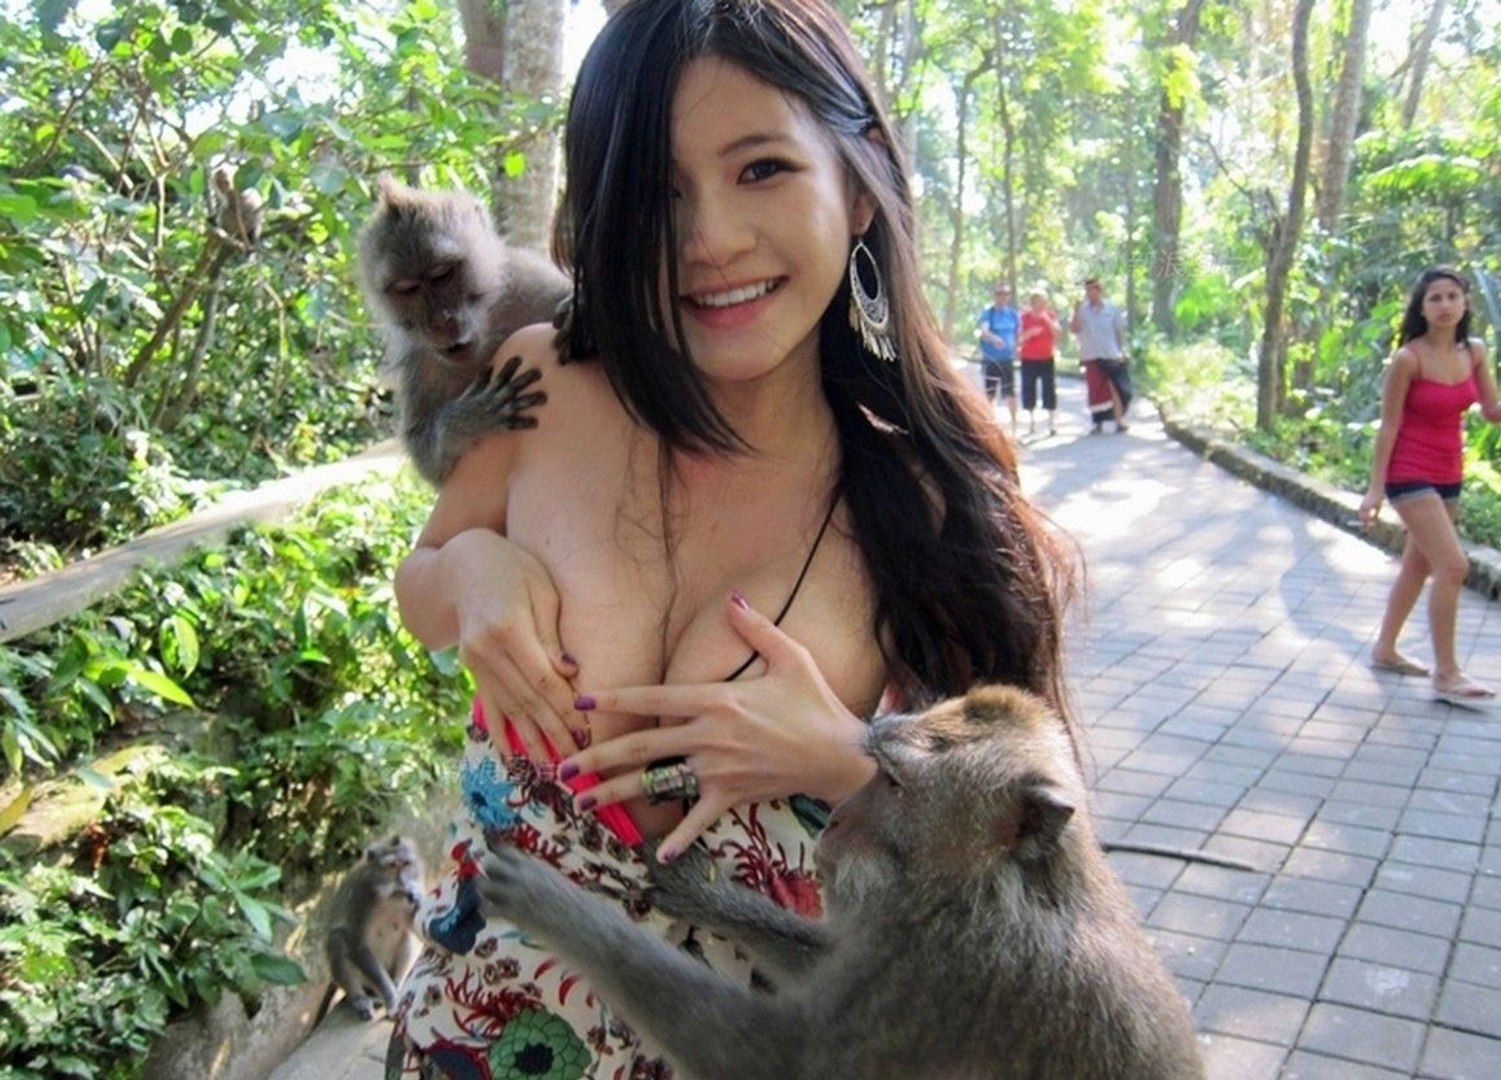 Bloody brazil teen zoo. Девушка и обезьяна. Самки девушки. Озабоченные животные. Женщина с обезьянкой.